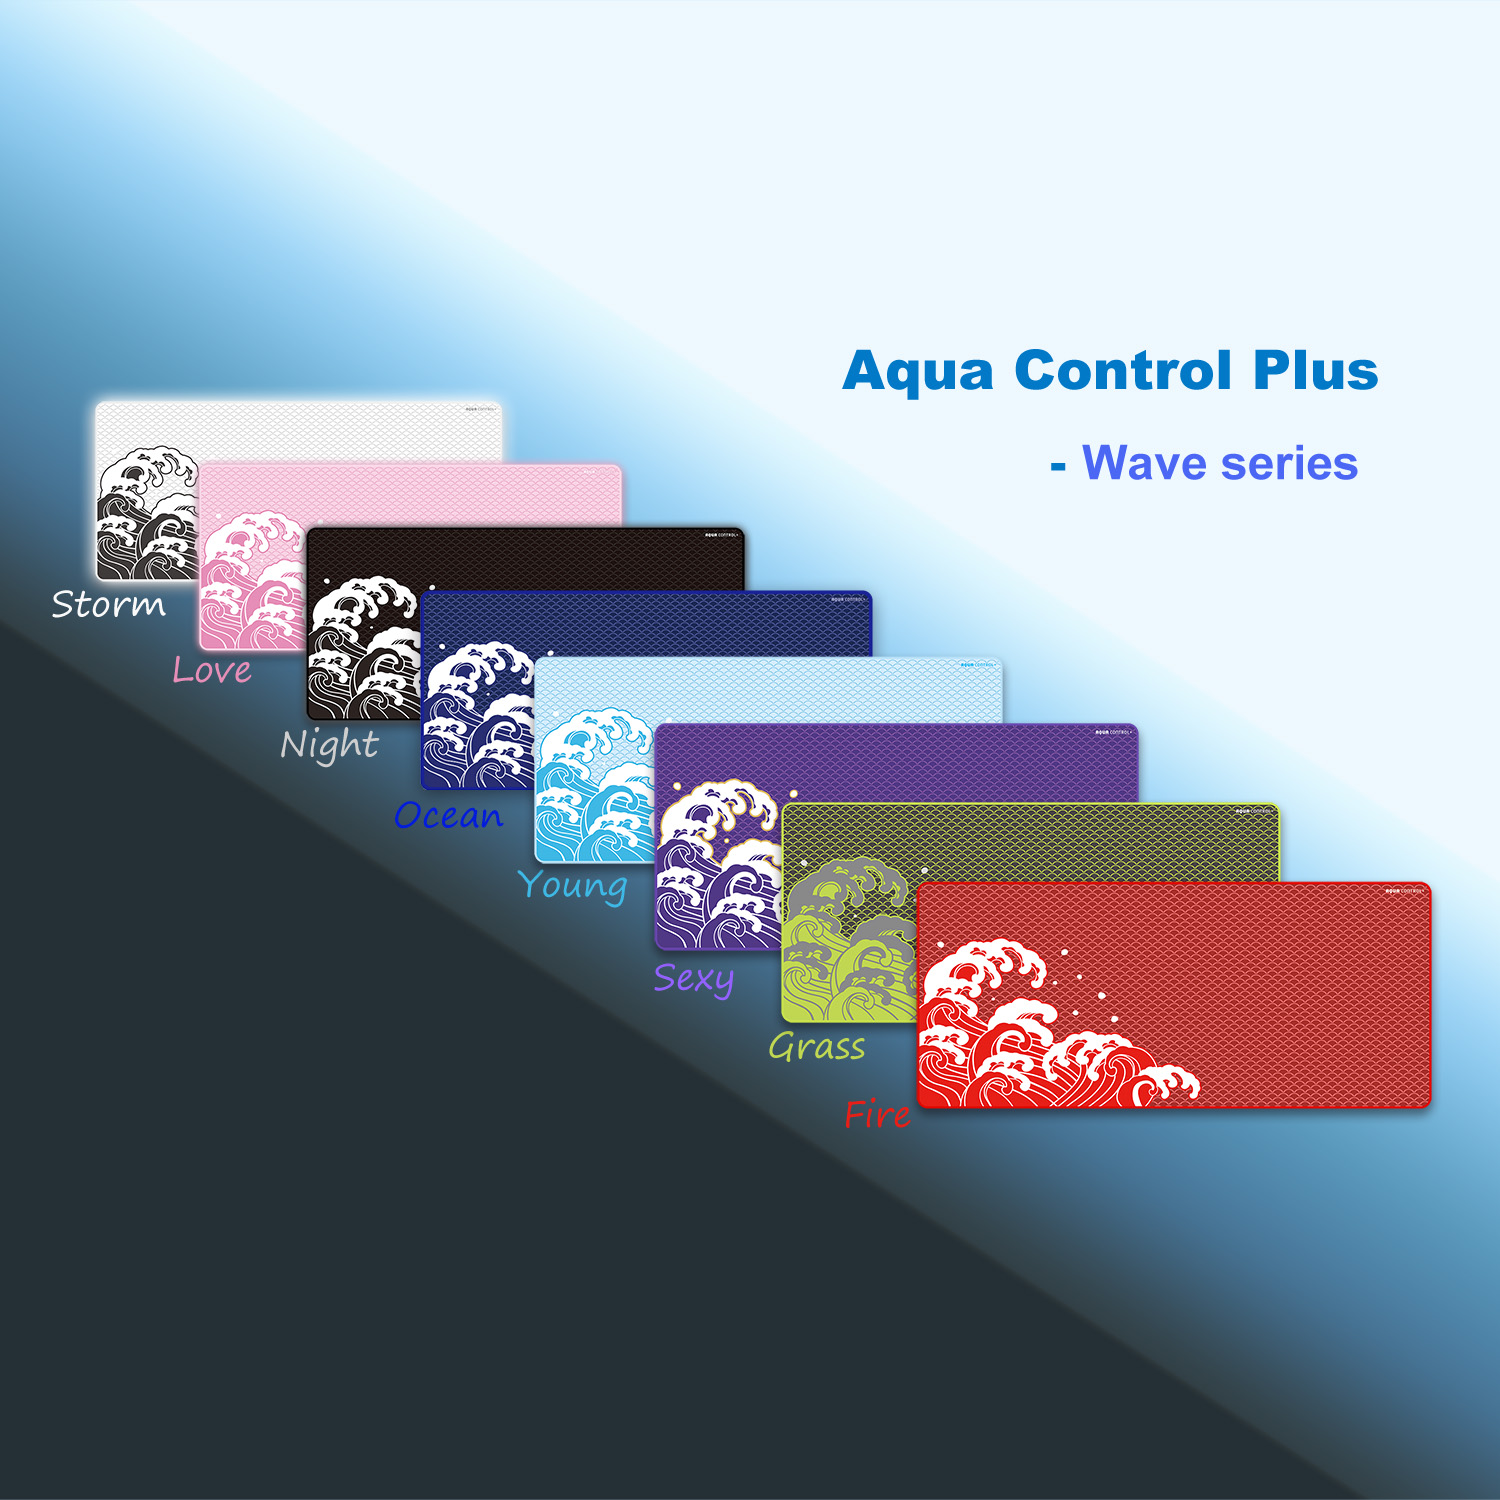 X-raypad Aqua Control Plus Gaming Mouse Pads - Wave Series